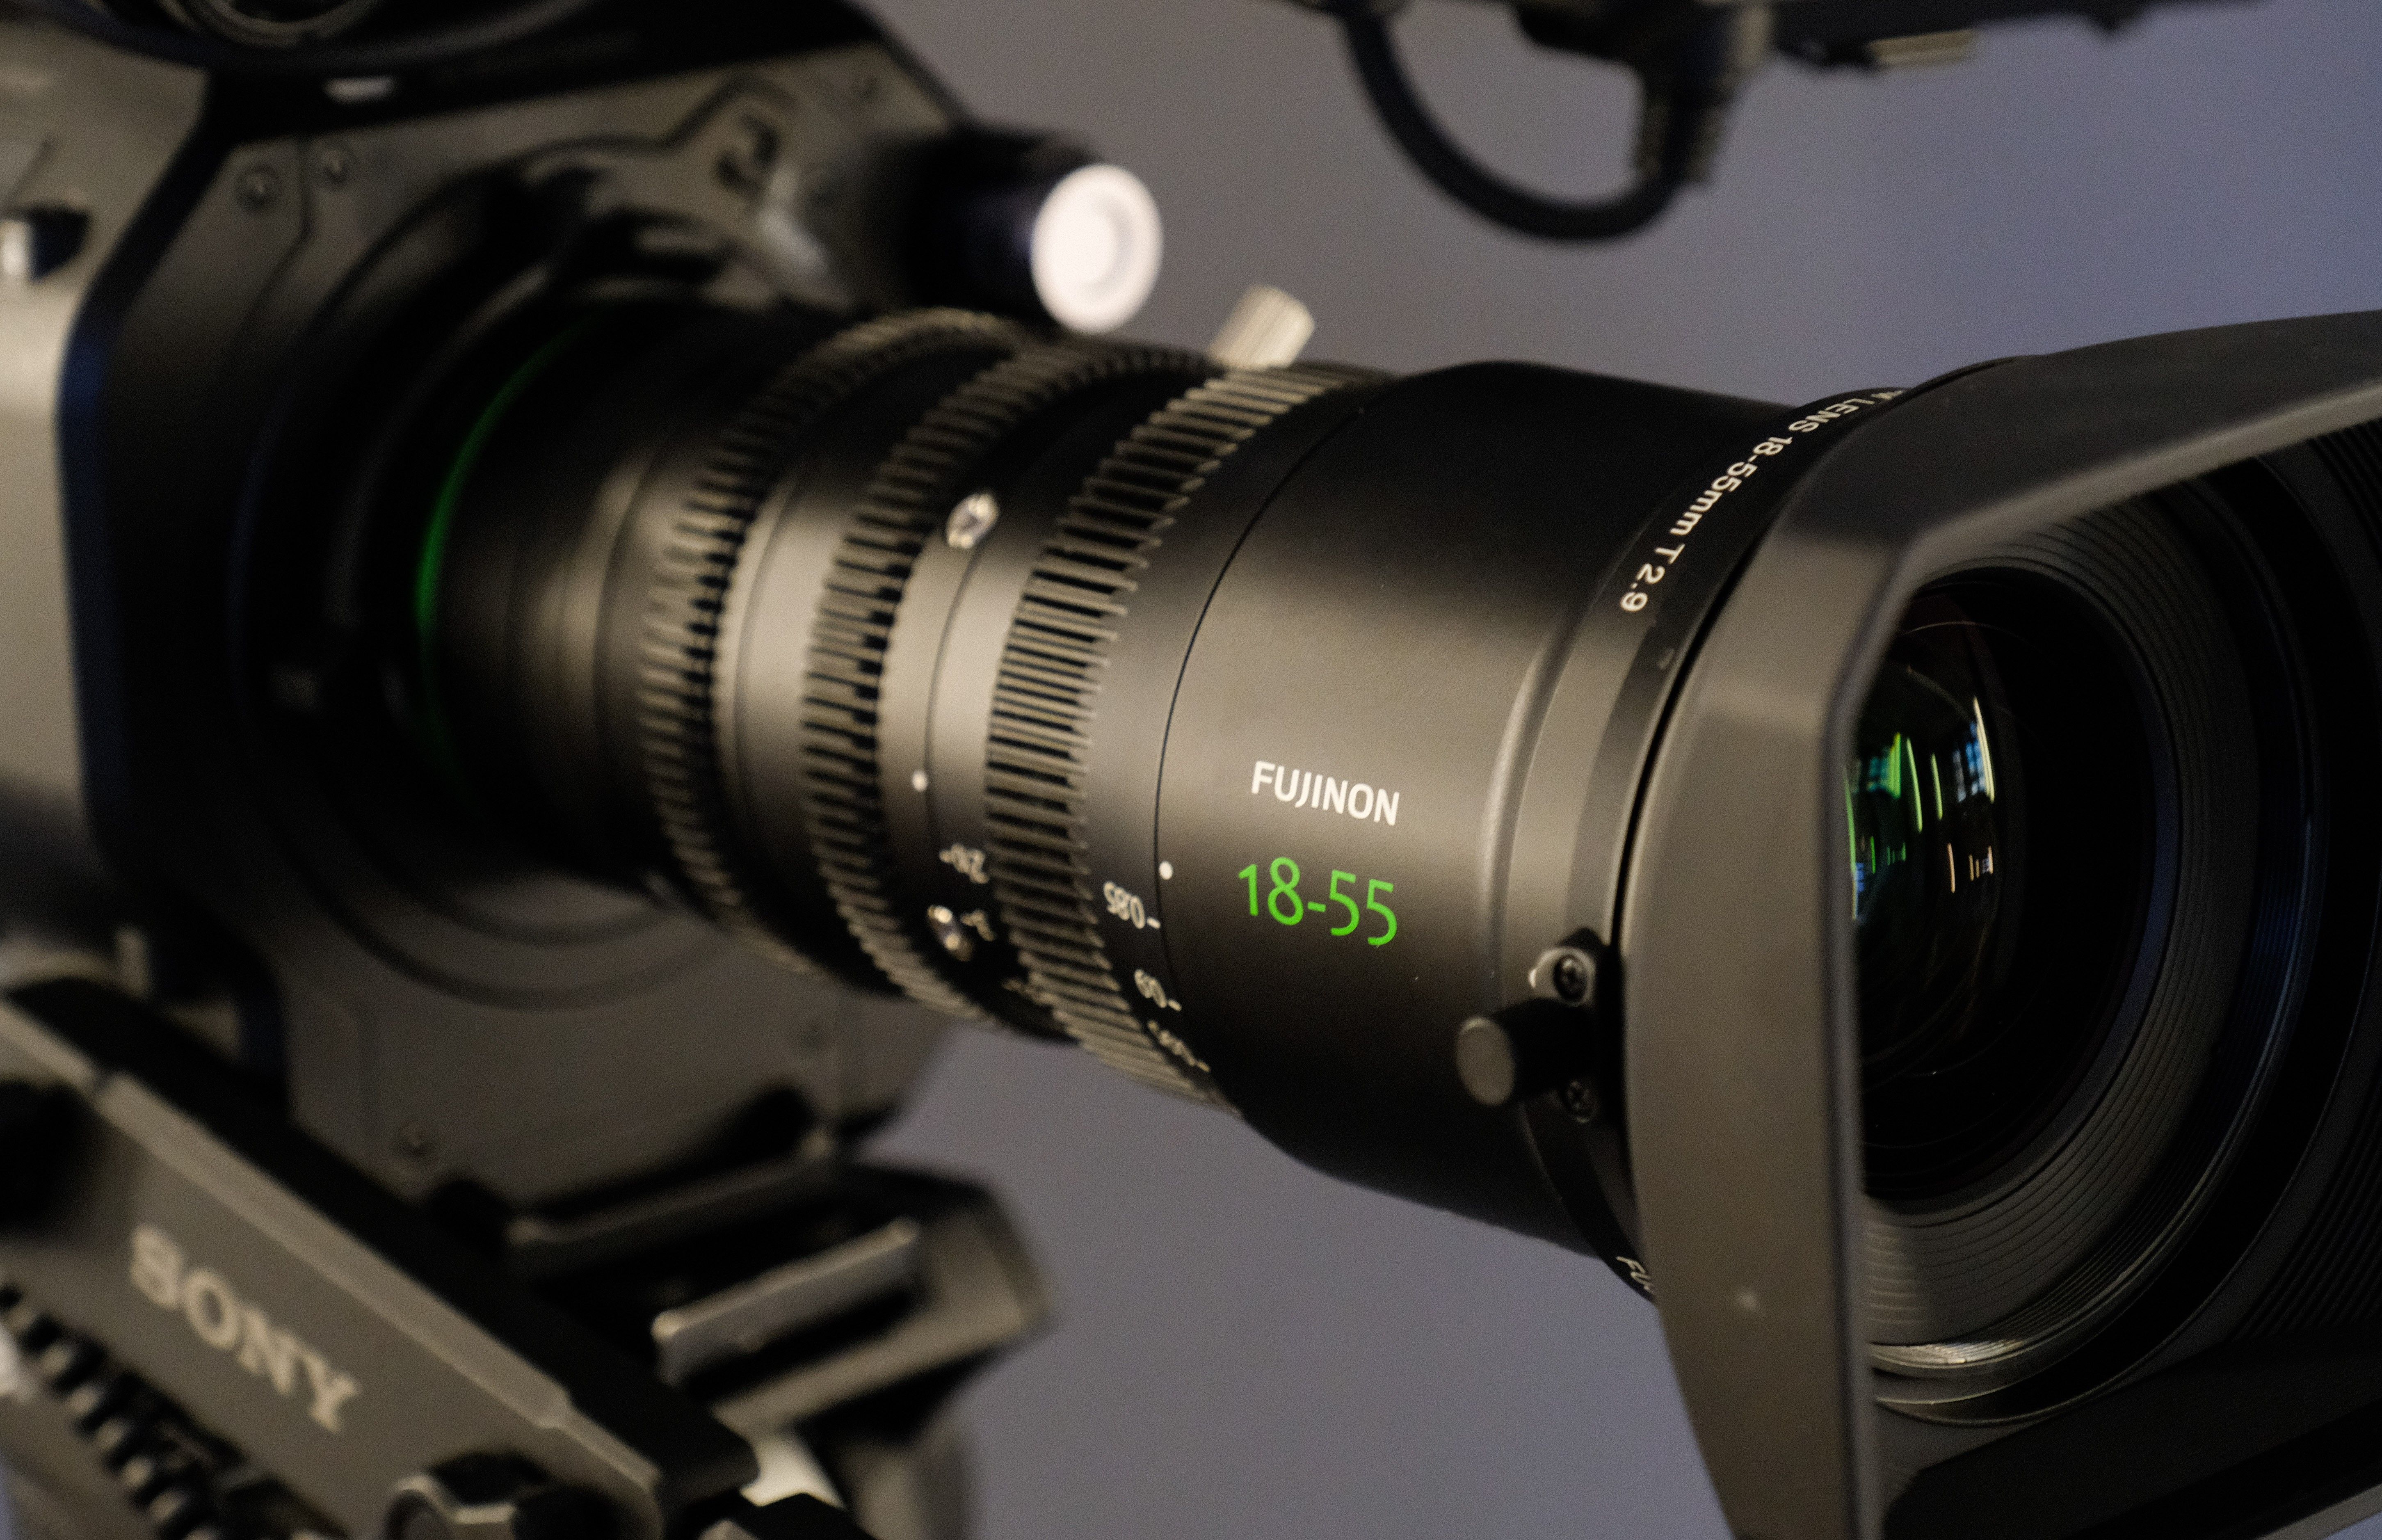 REVIEW: Fujifilm MK 18-55 Zoom Lens